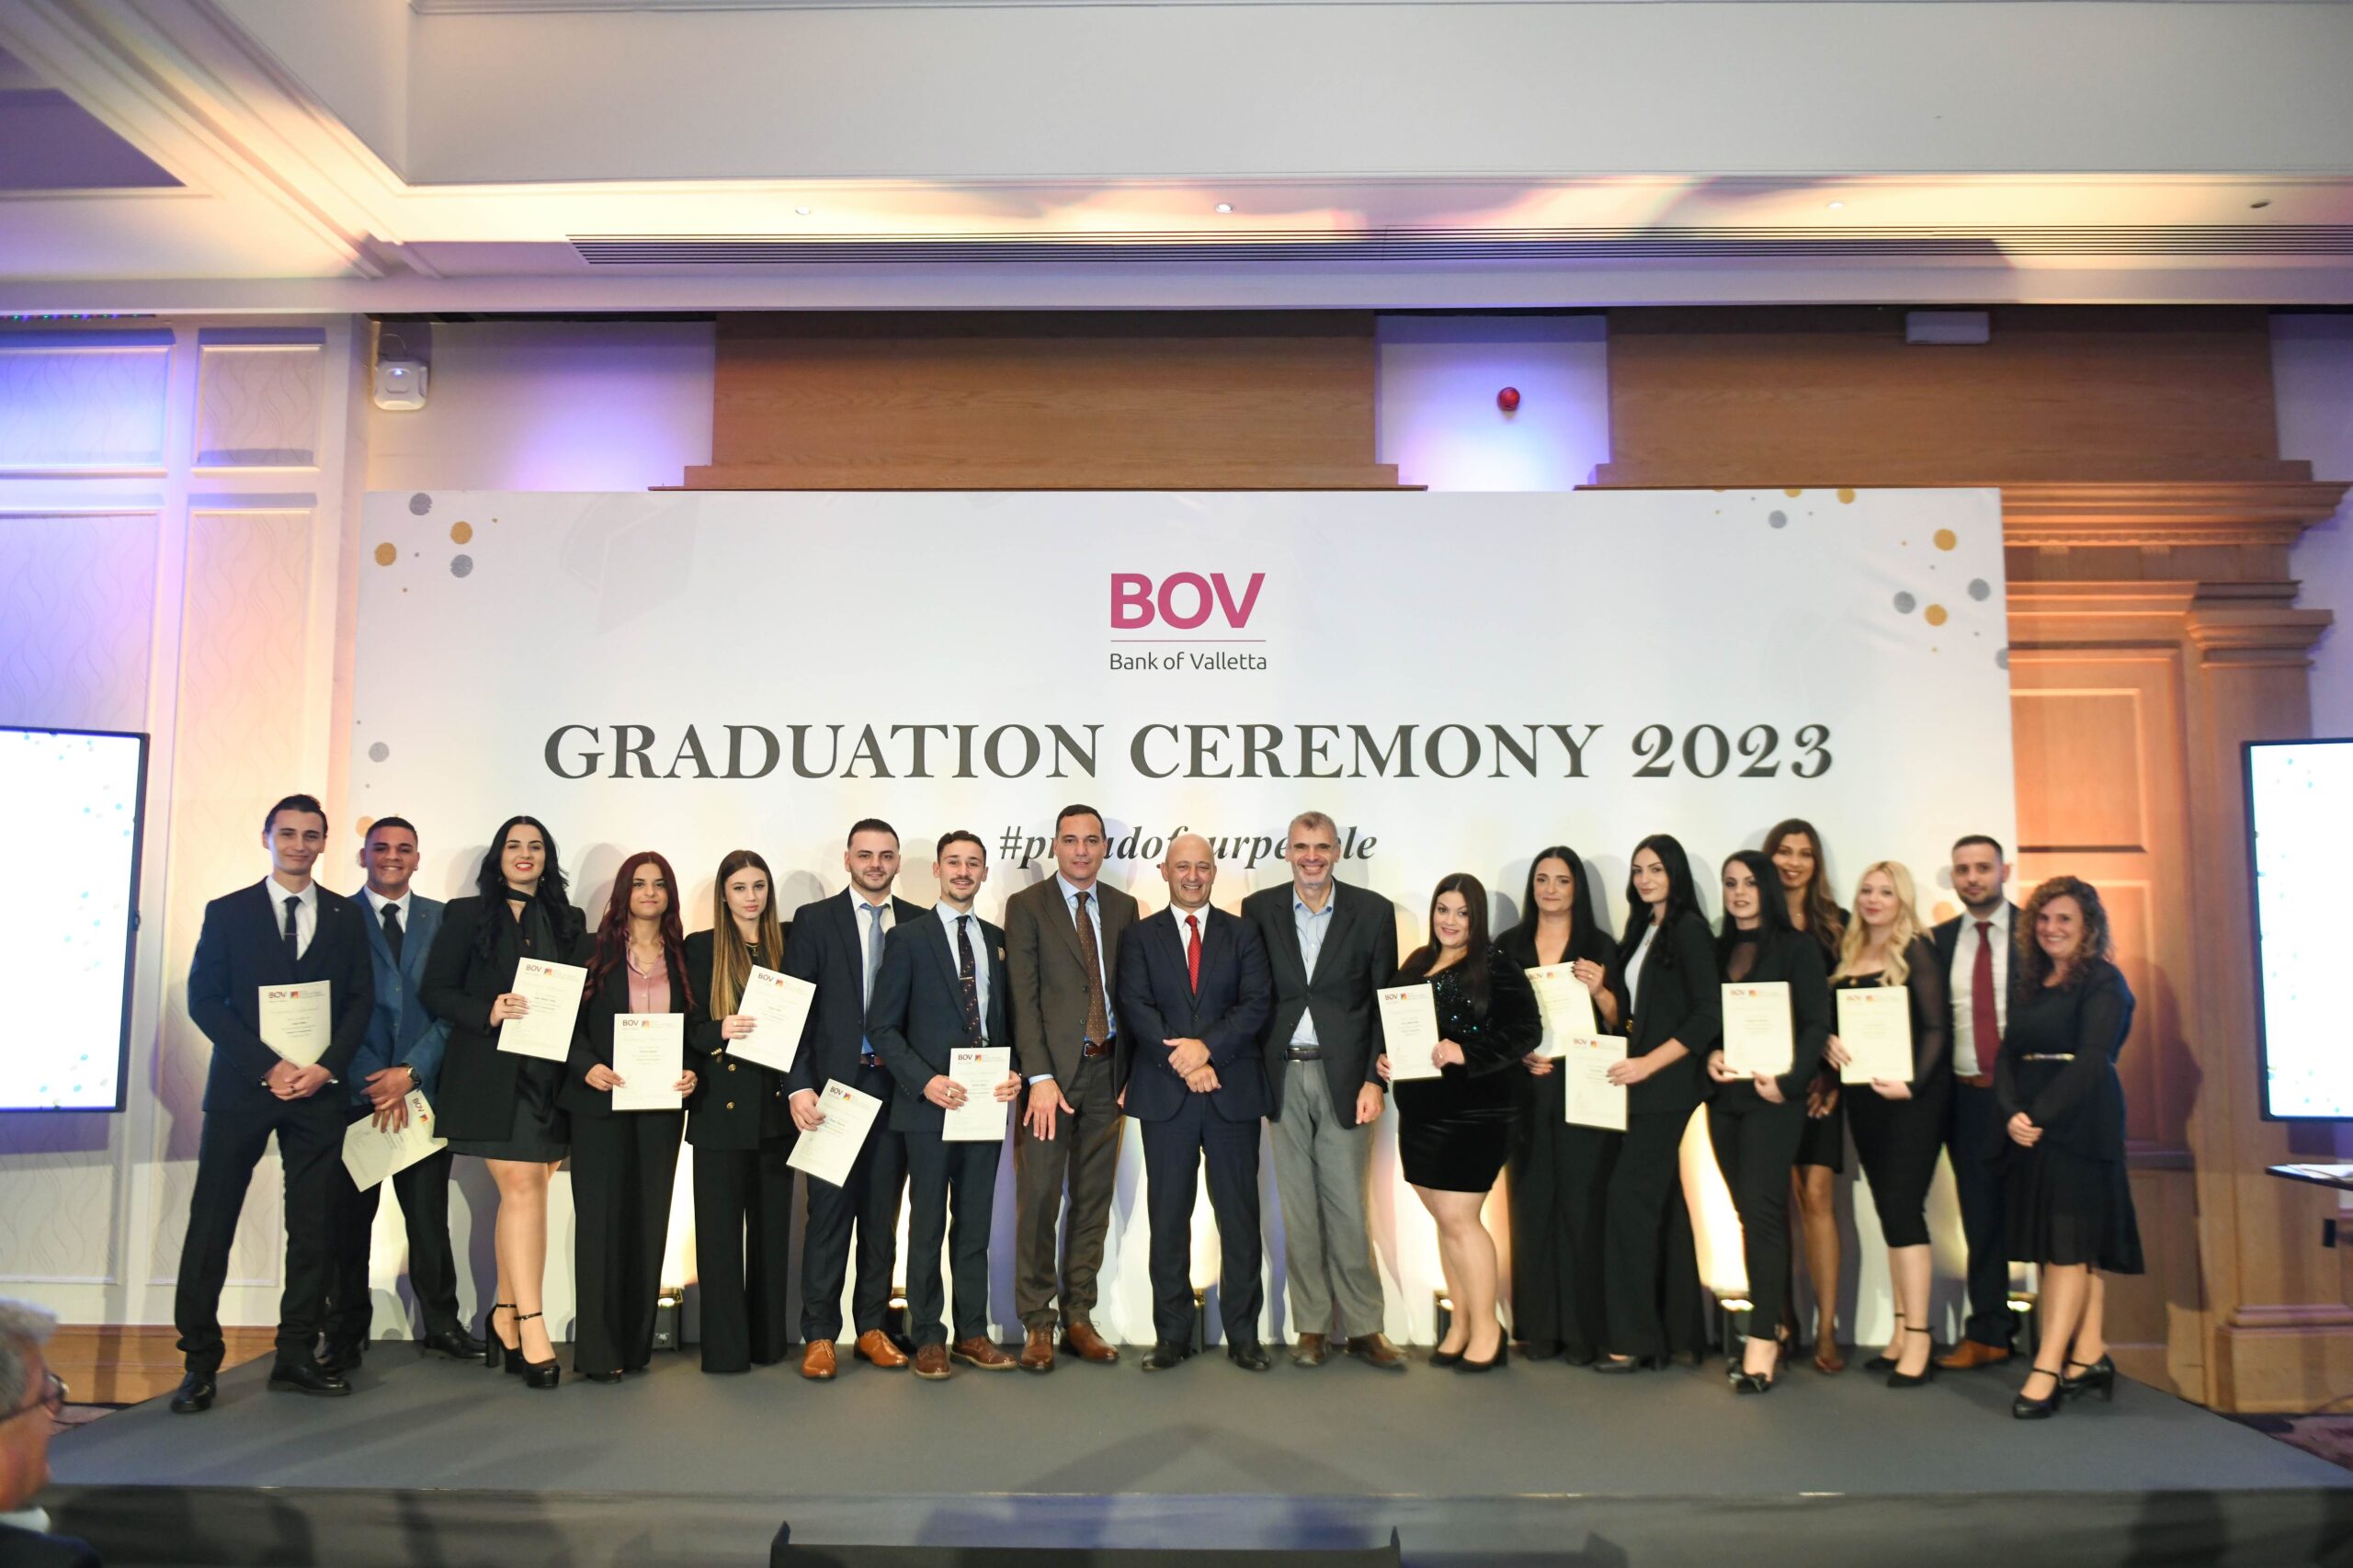 2023 sees 151 BOV employees graduate